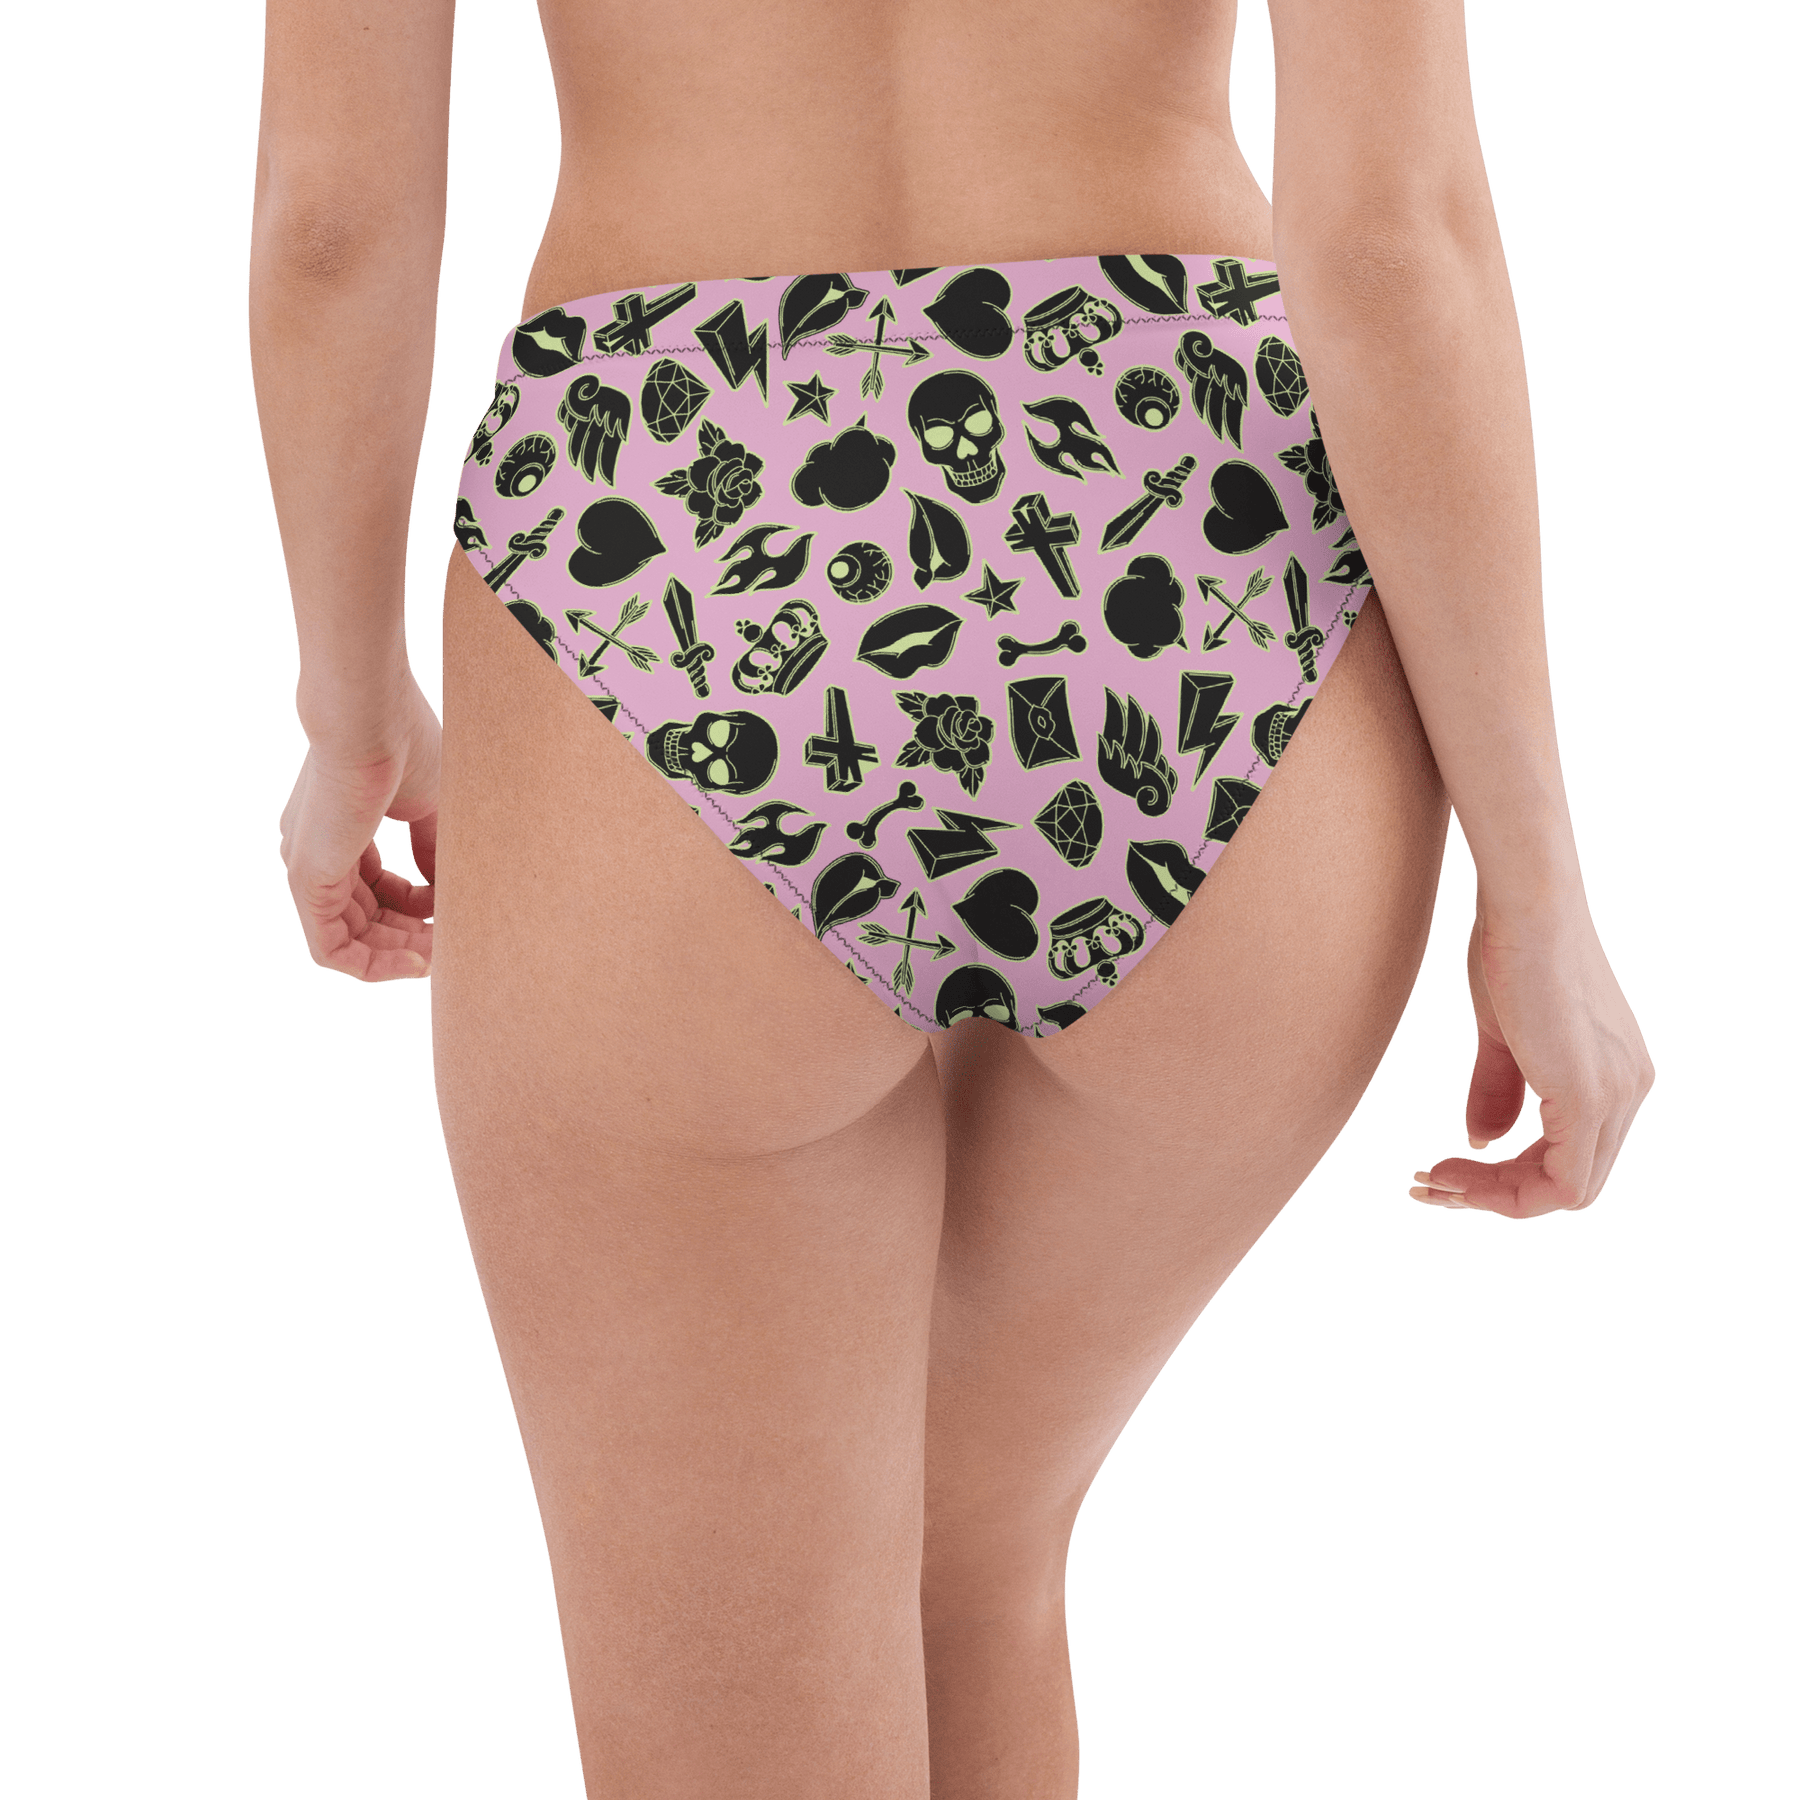 Punk Princess Sport High-Waisted Bikini Bottom - Goth Cloth Co.6095002_12042